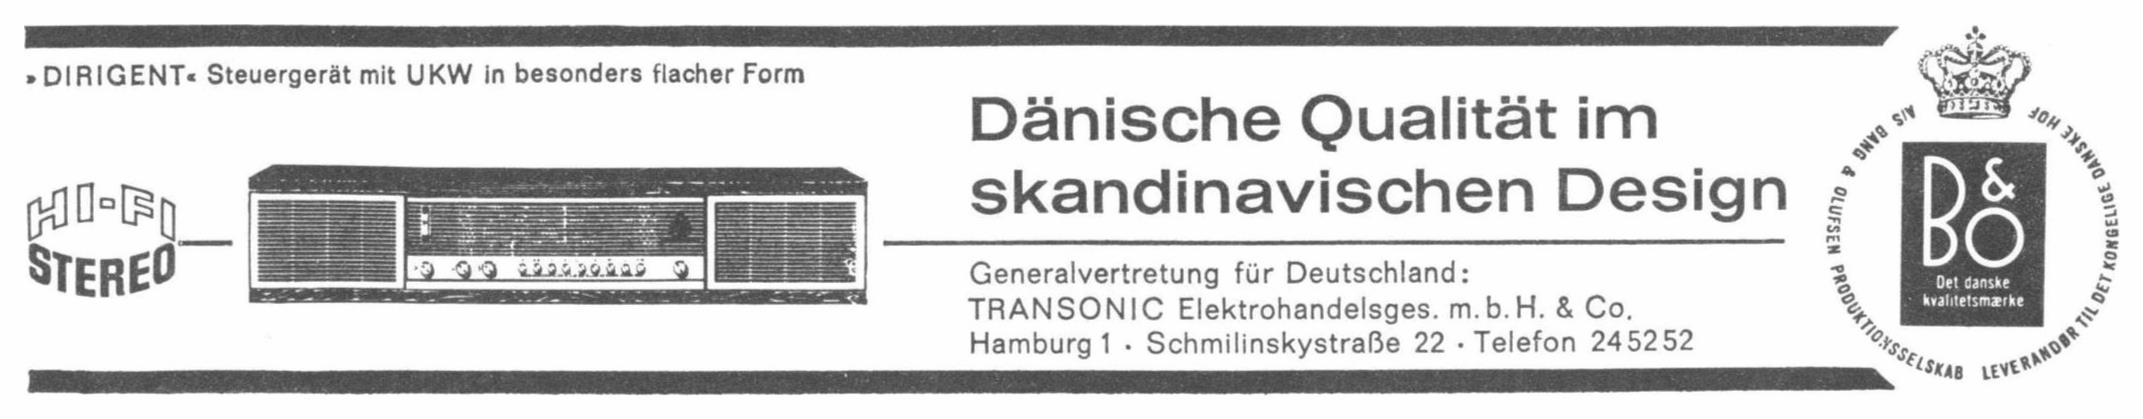 Bang & Olufsen 1964 3.jpg